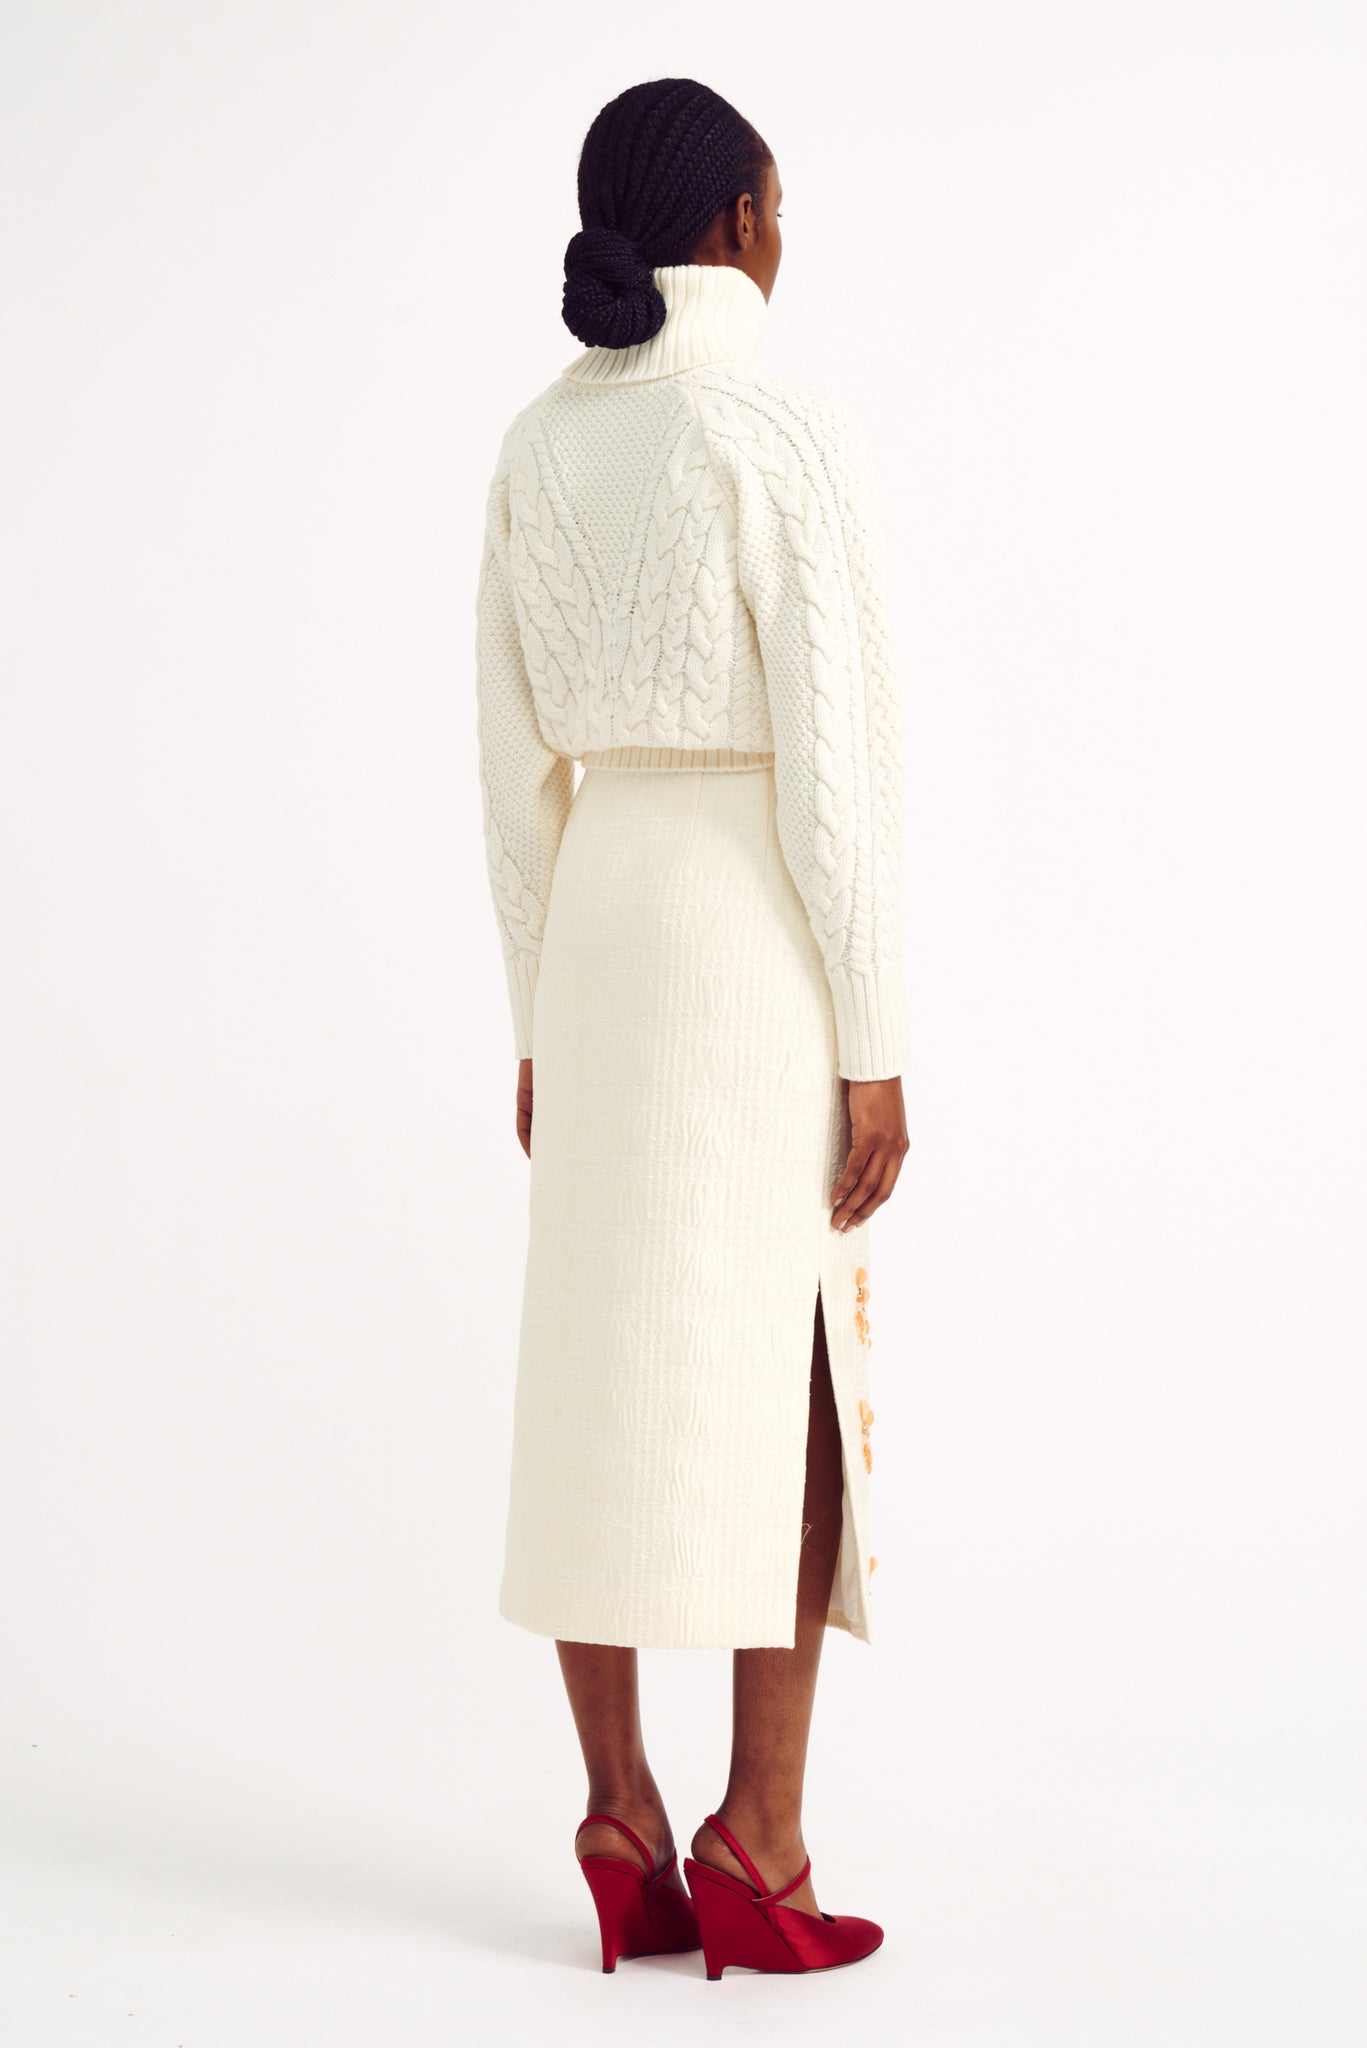 Lenna Embellished Skirt in Ivory Check Tweed | Emilia Wickstead